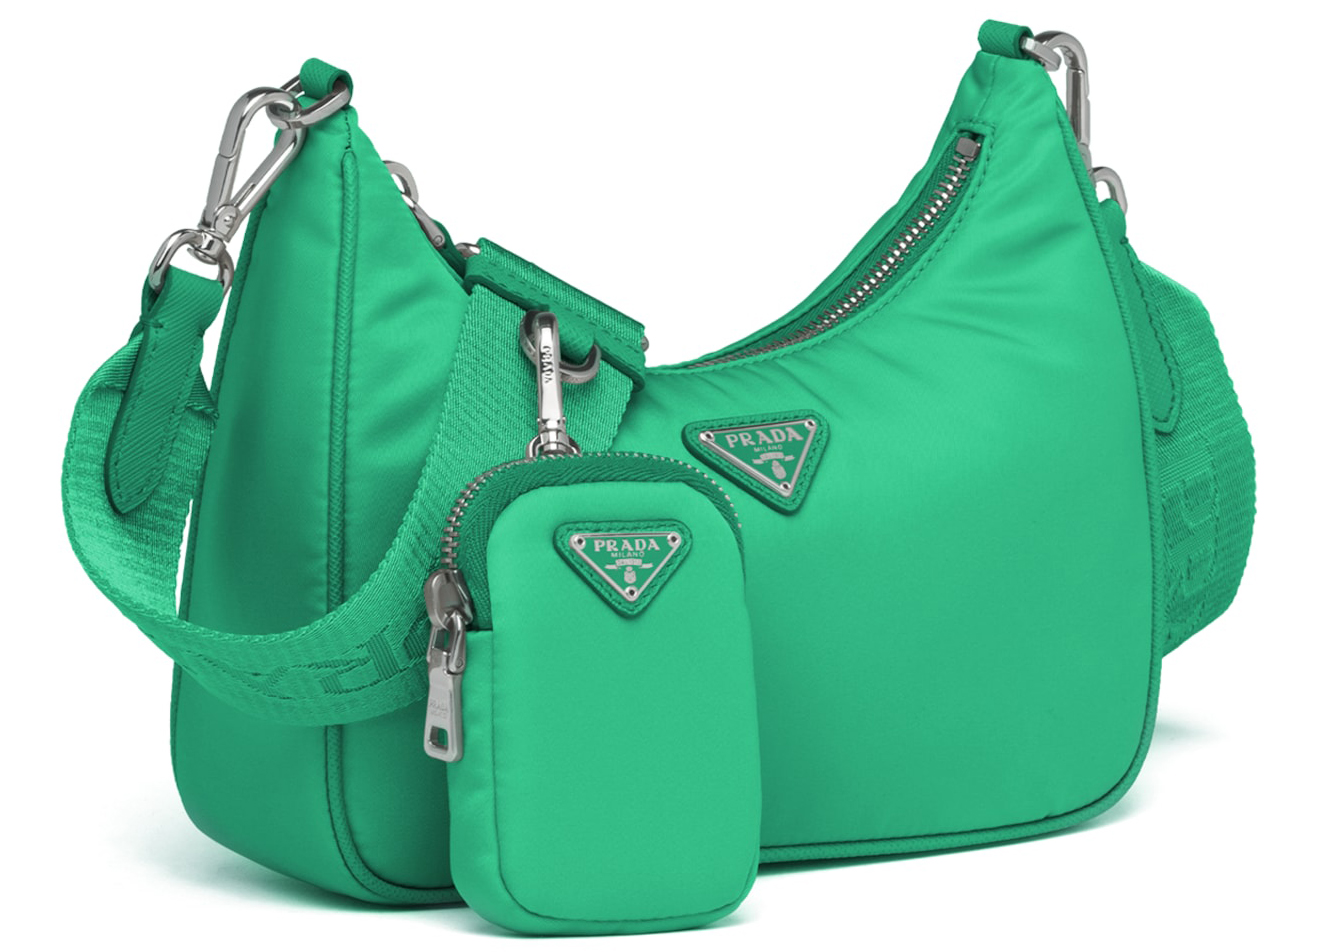 green prada nylon bag